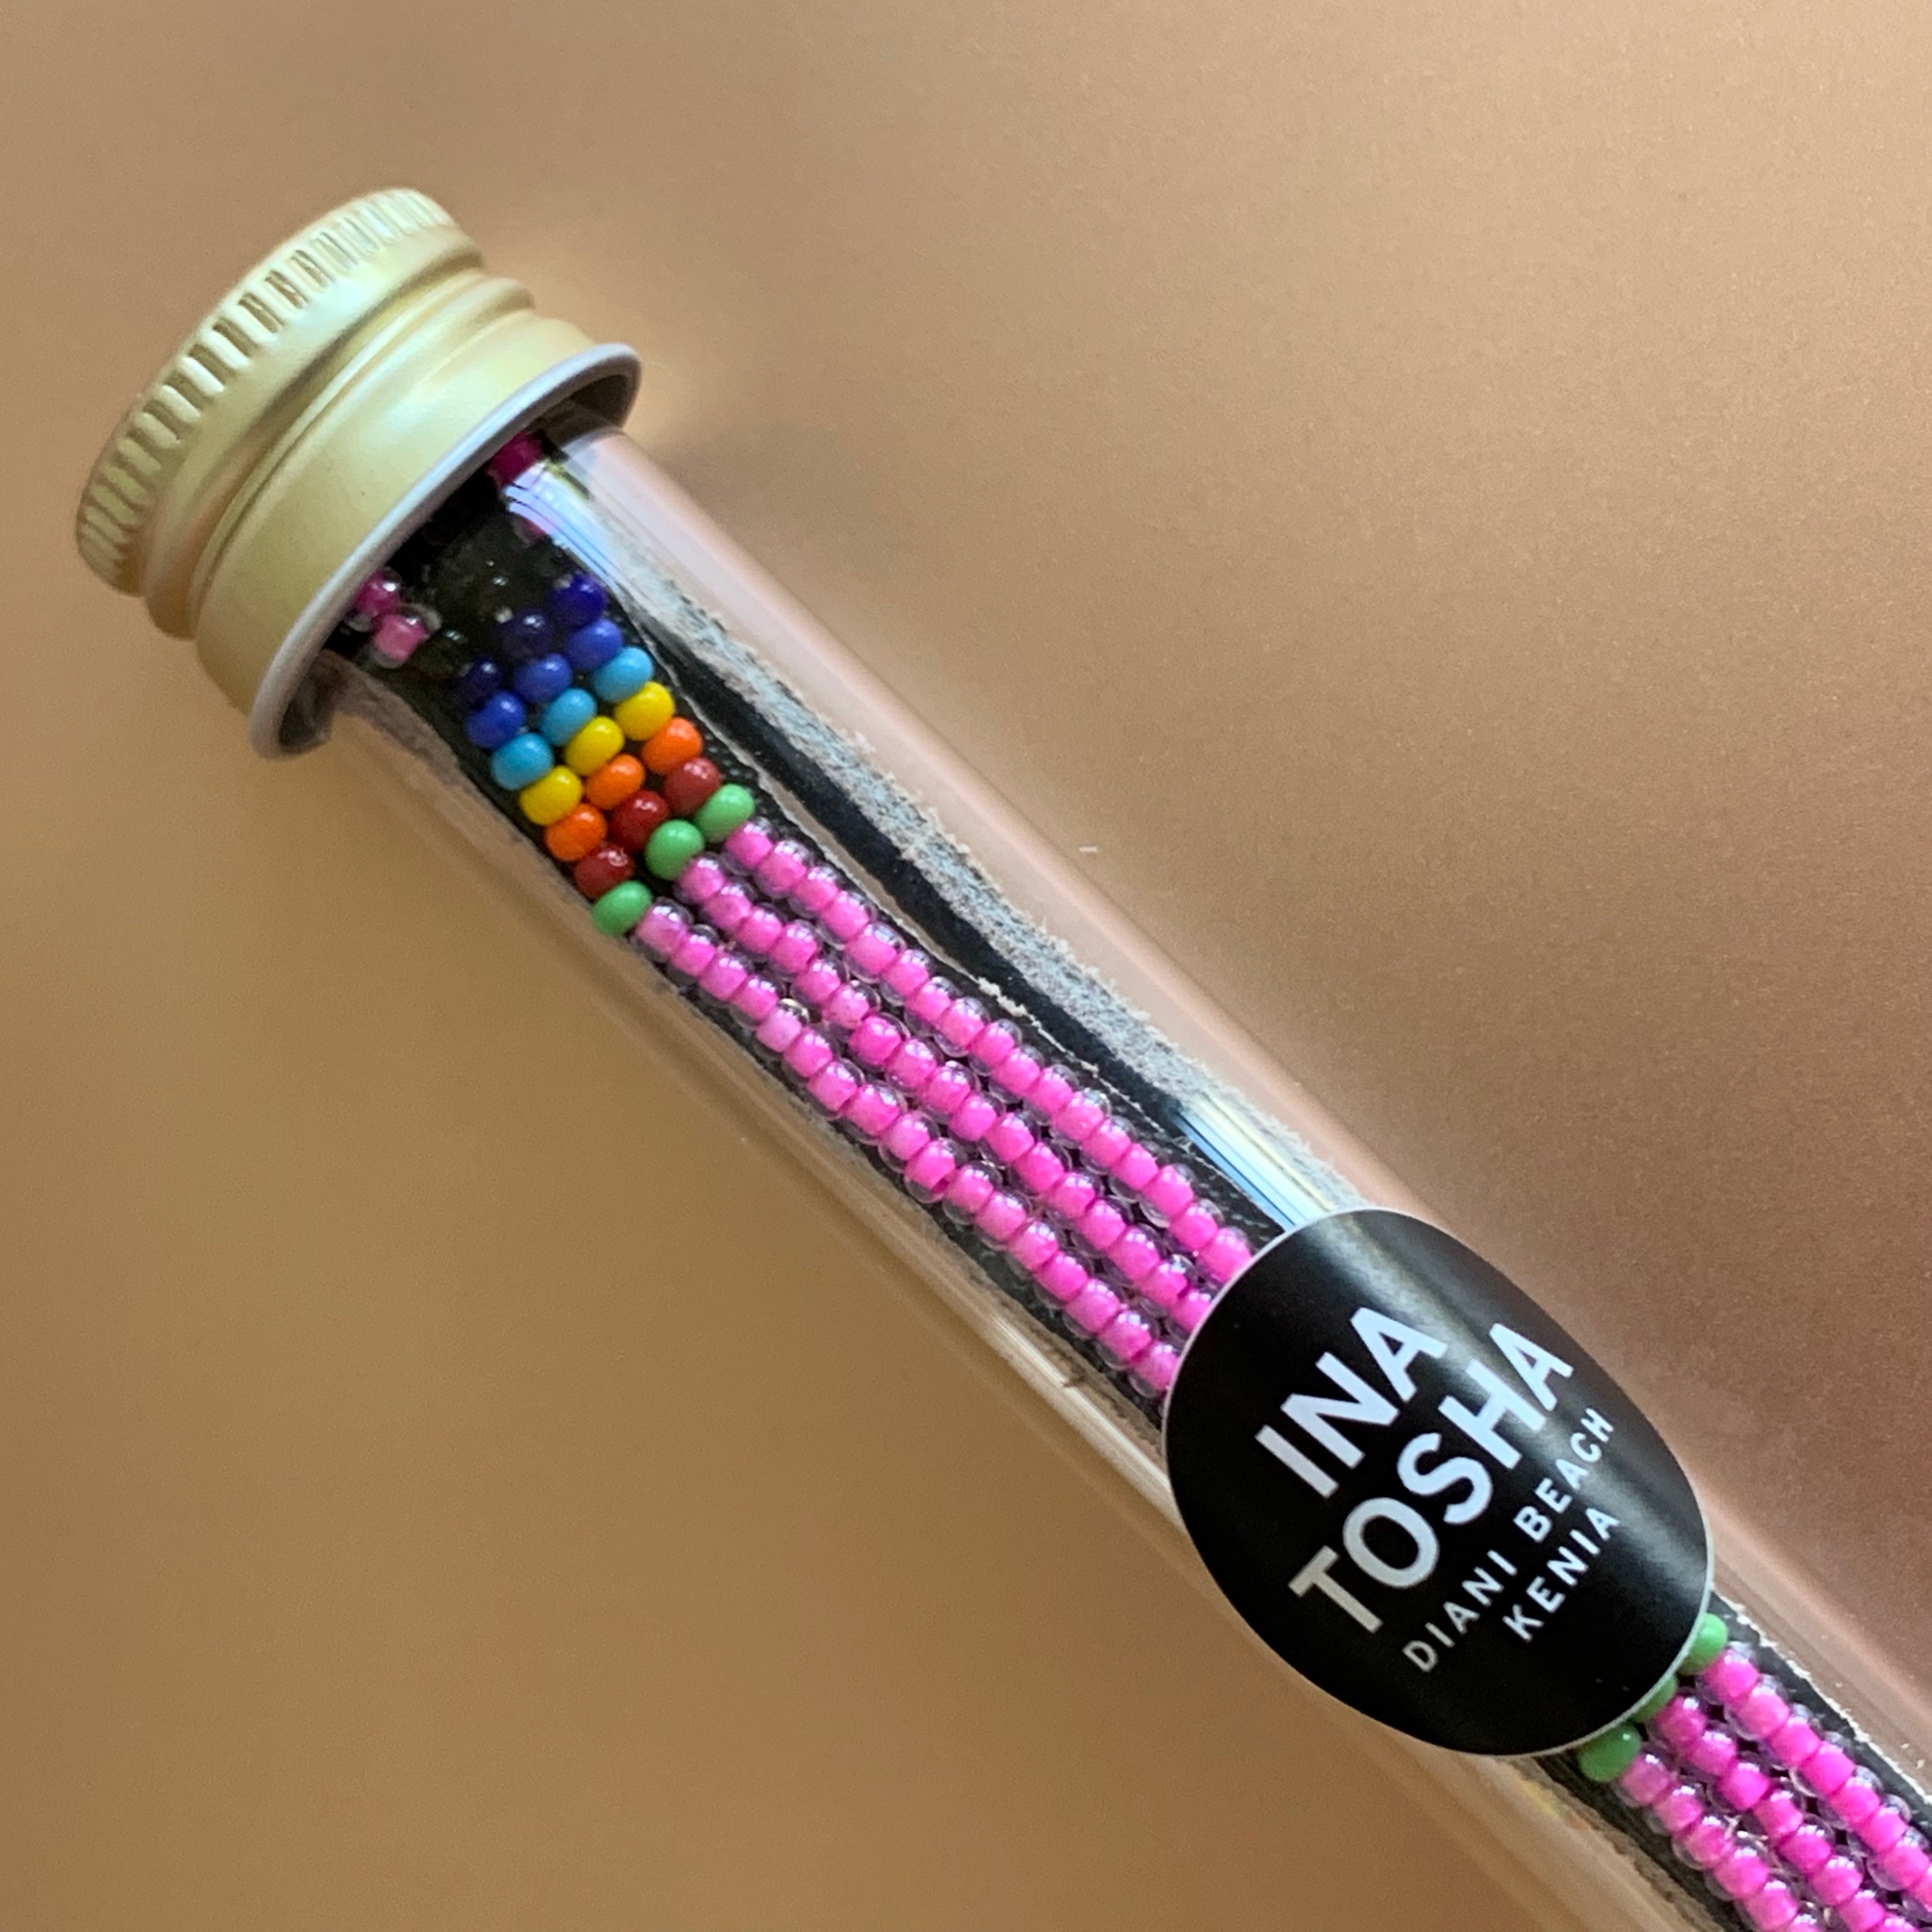 Armband pink with rainbow